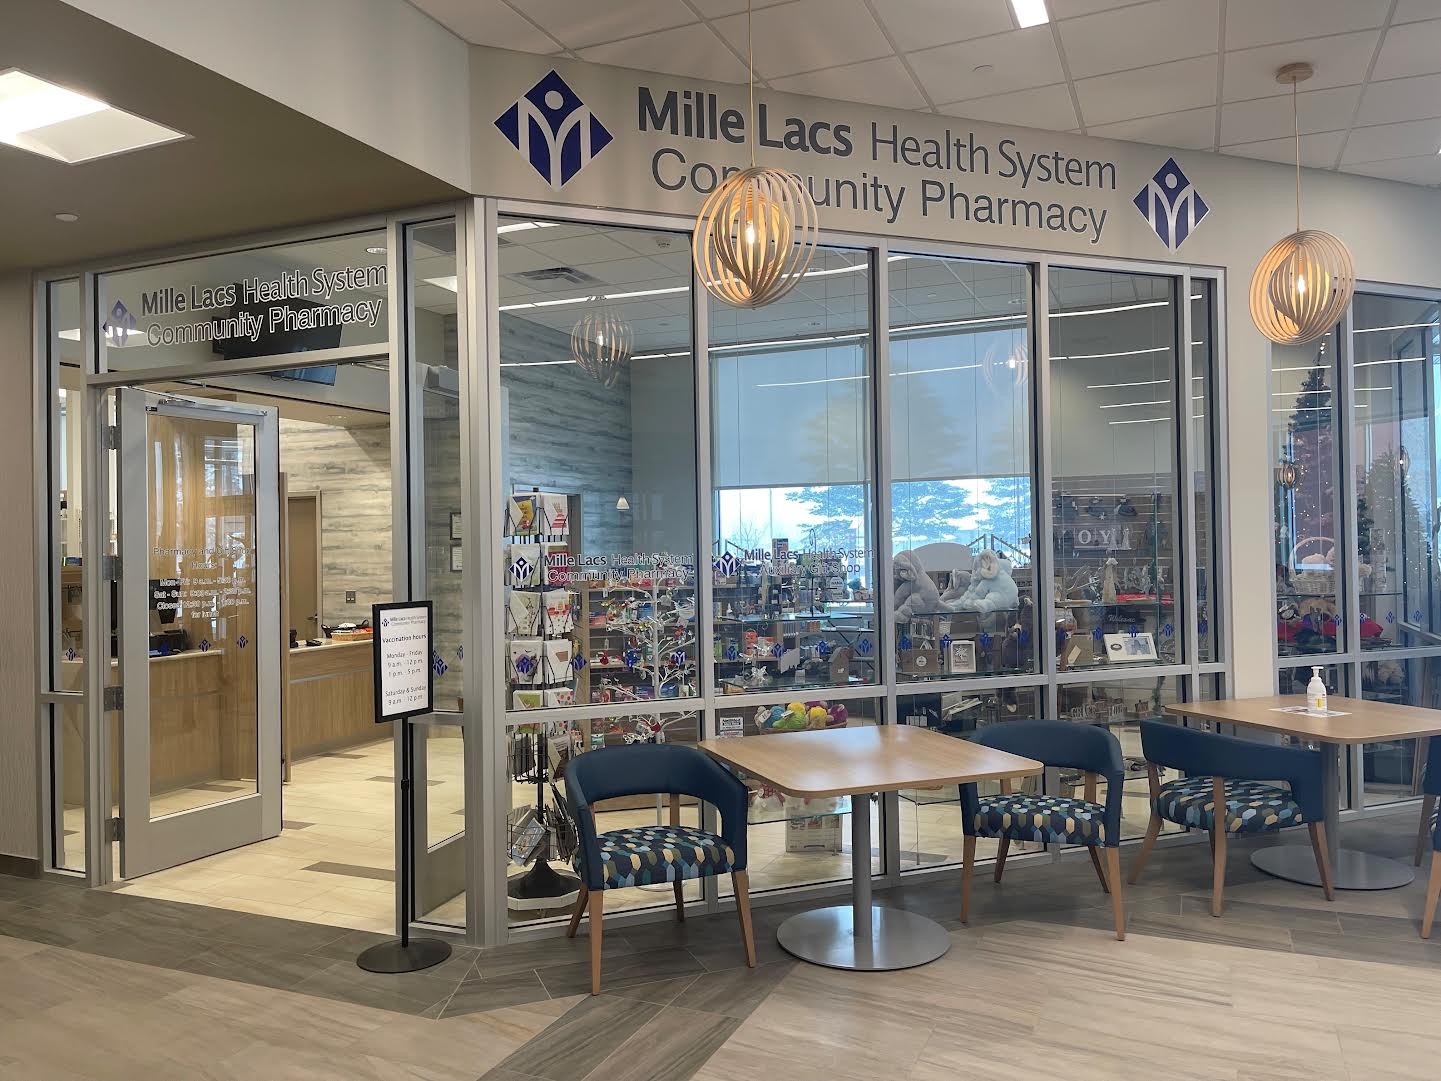 Mille Lacs Community Pharmacy